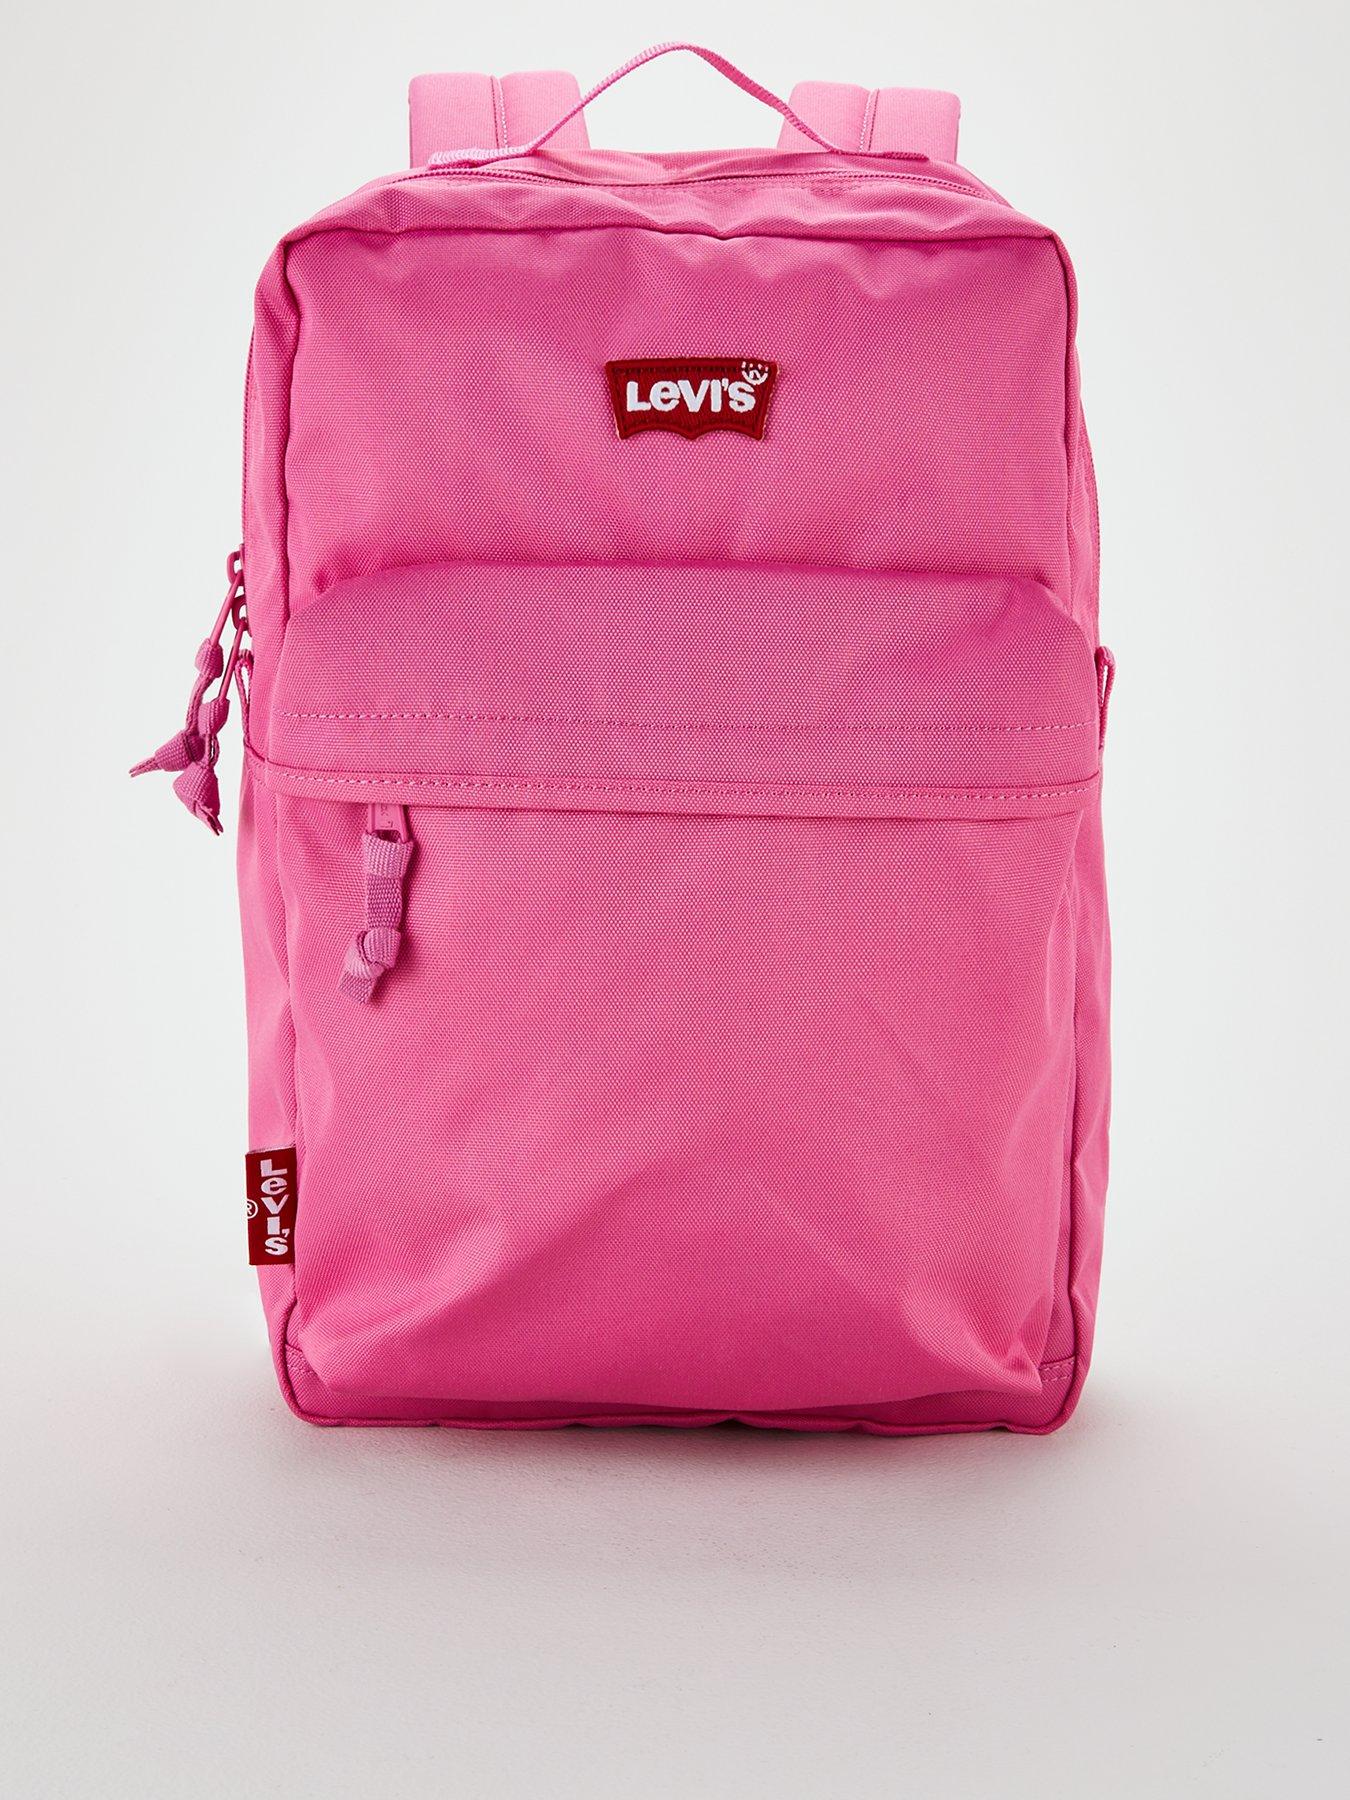 levi's backpack women's